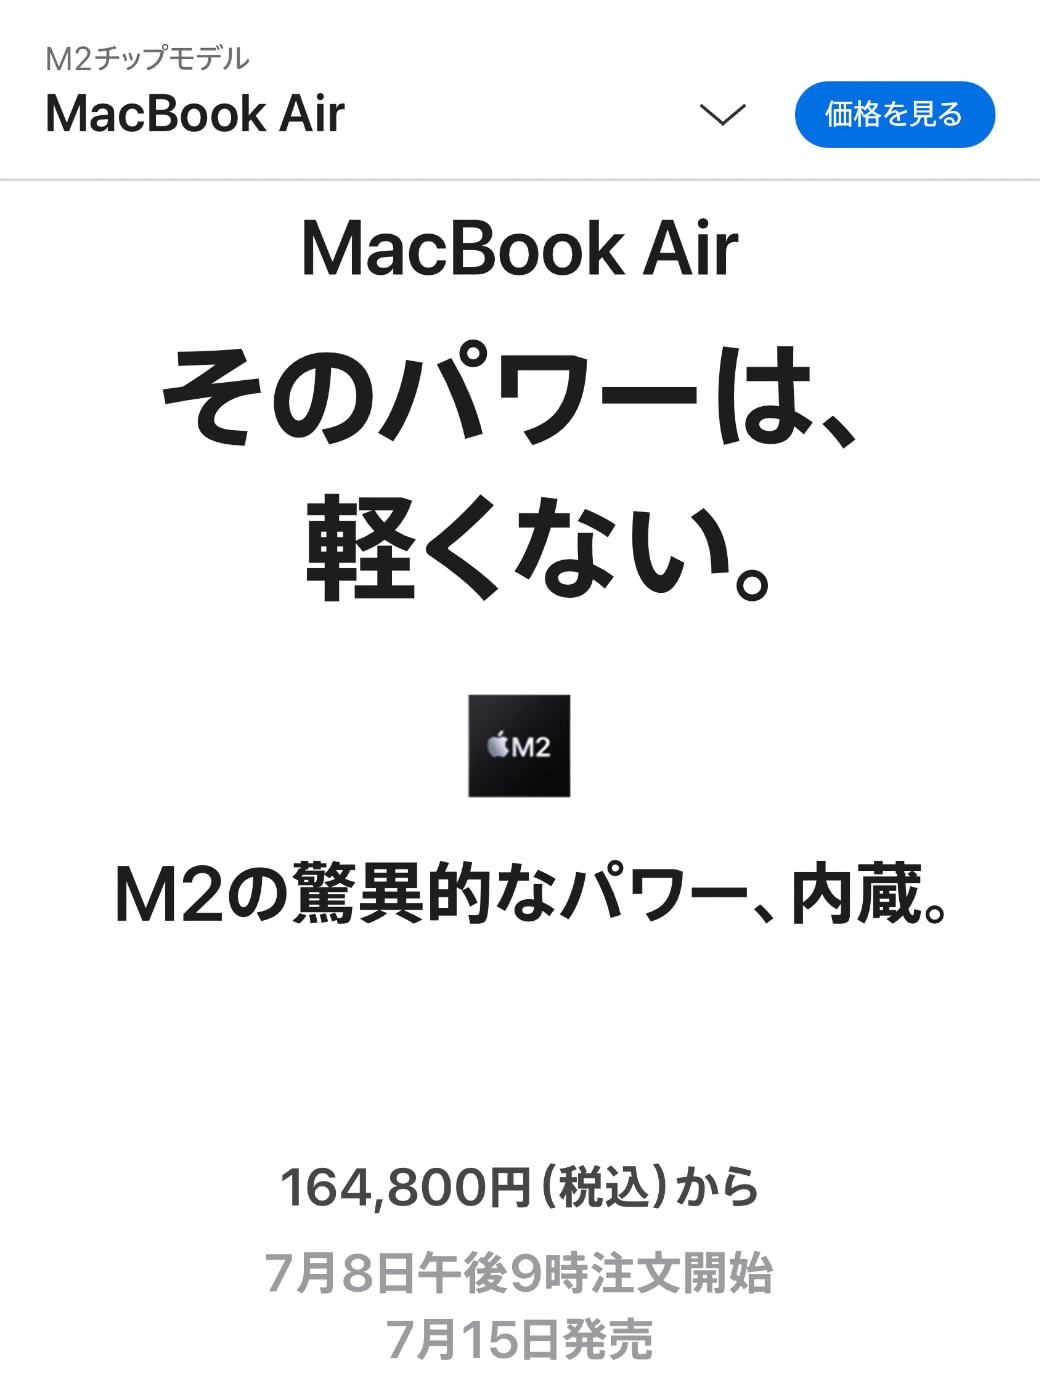 MacBook Airを7月15日に販売開始